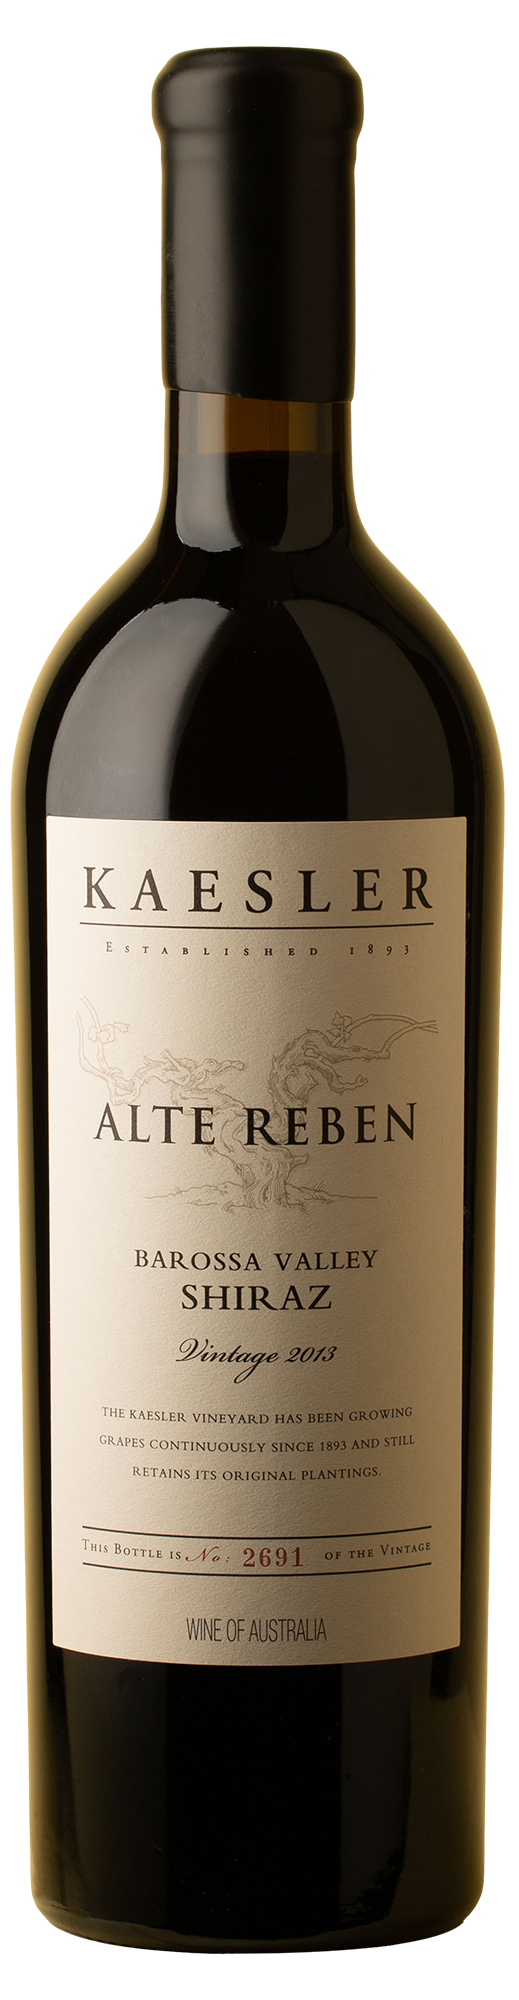 Kaesler - Alte Reben Shiraz 2013 Red Wine